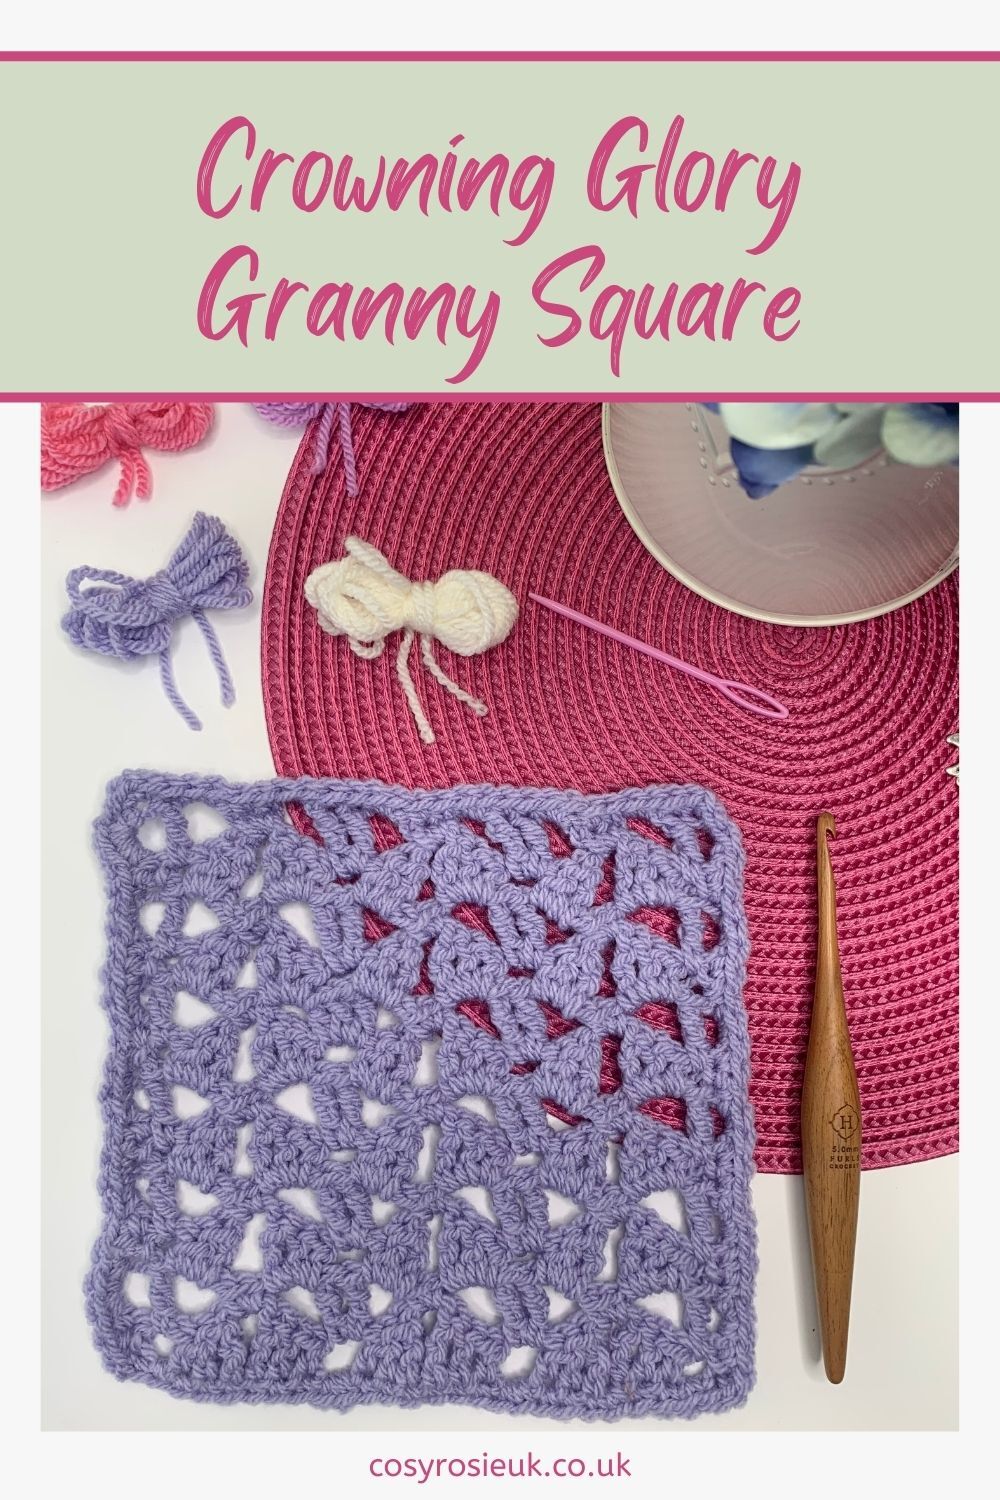 Crowning glory free Granny Square pattern